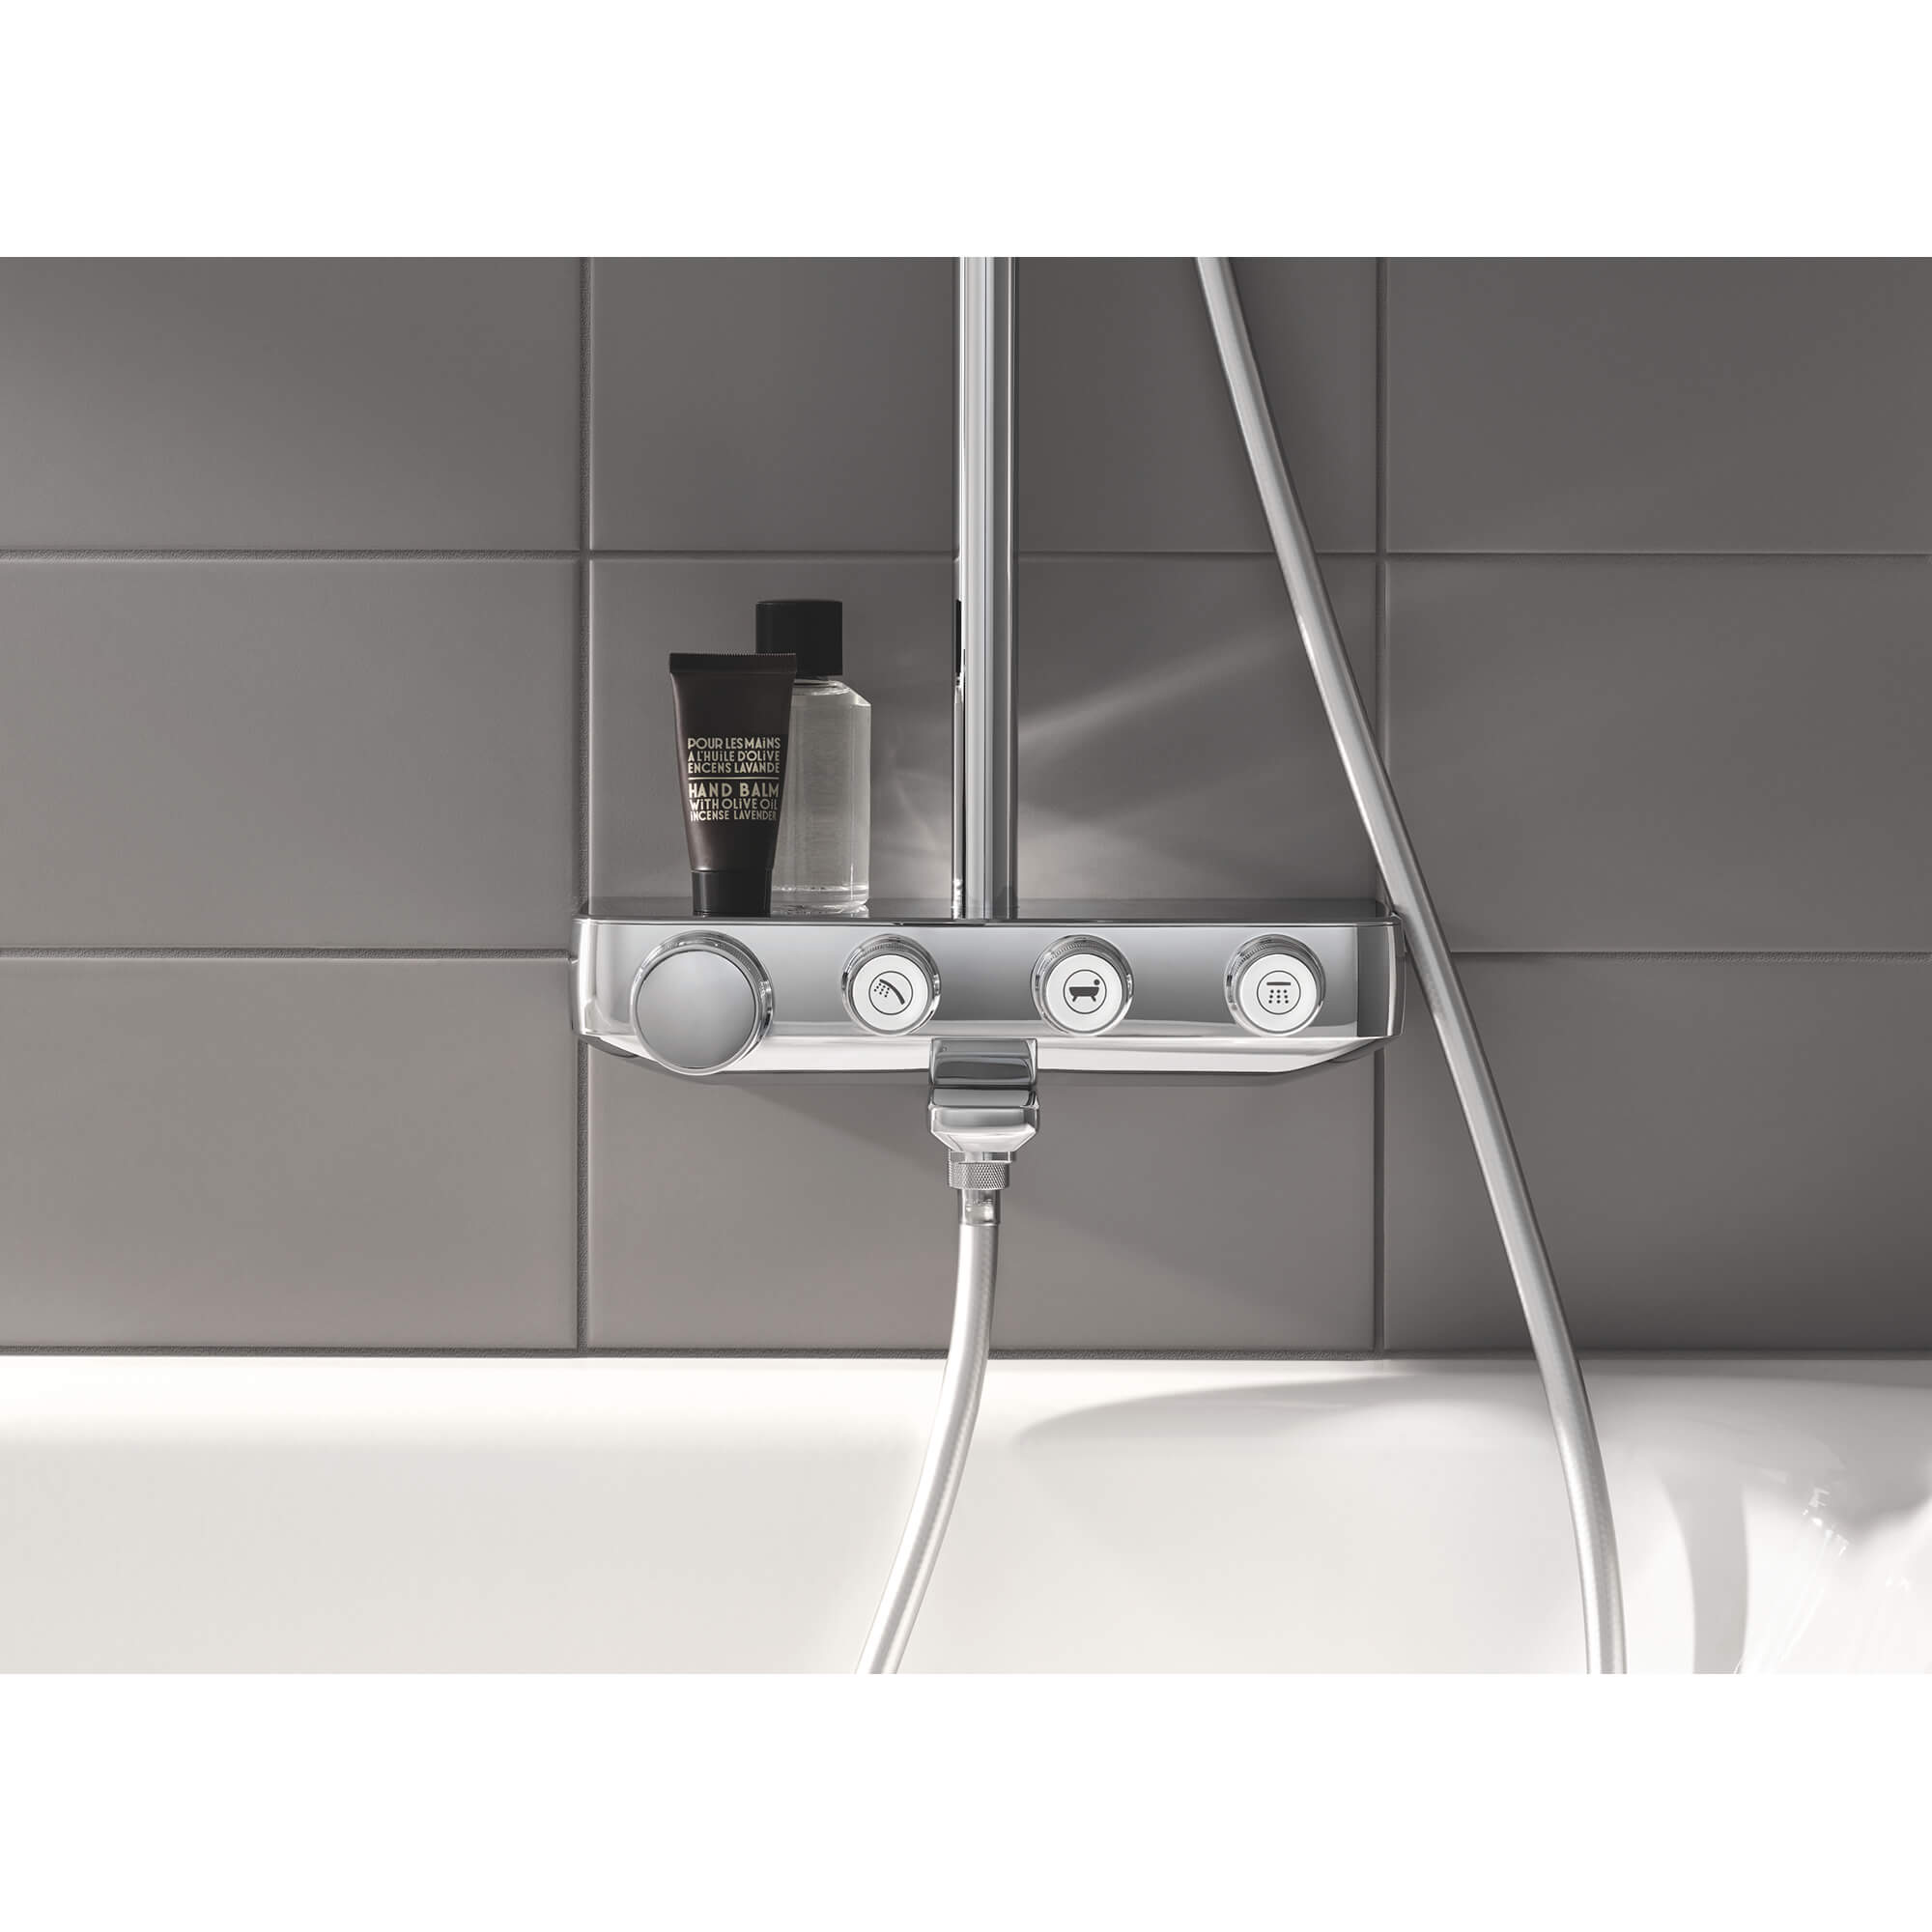 Thermostatic Tub/Shower System